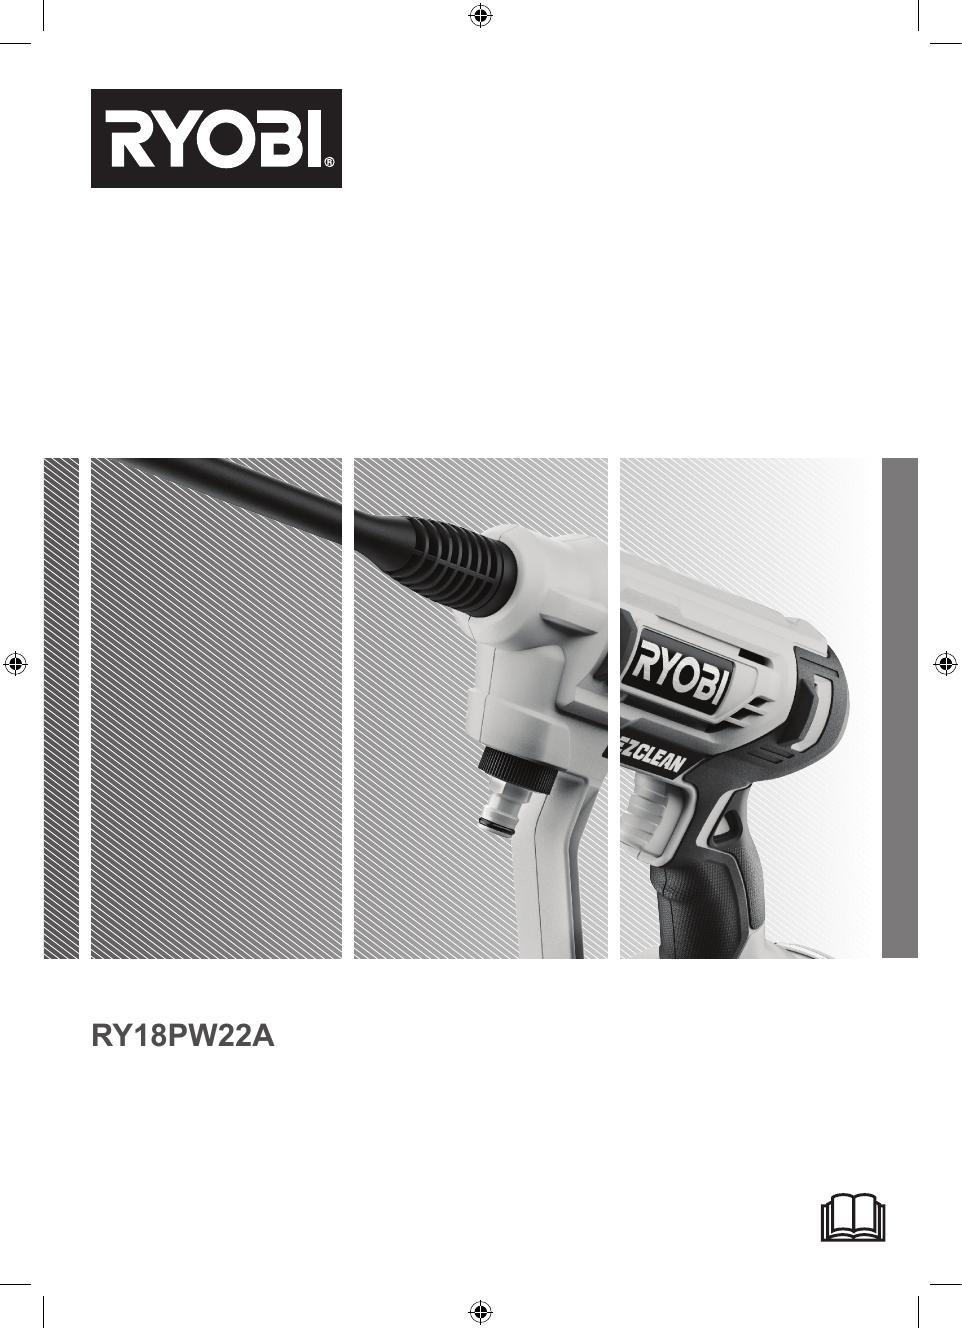 ryobi-ezclean-cordless-power-washer-user-manual.pdf